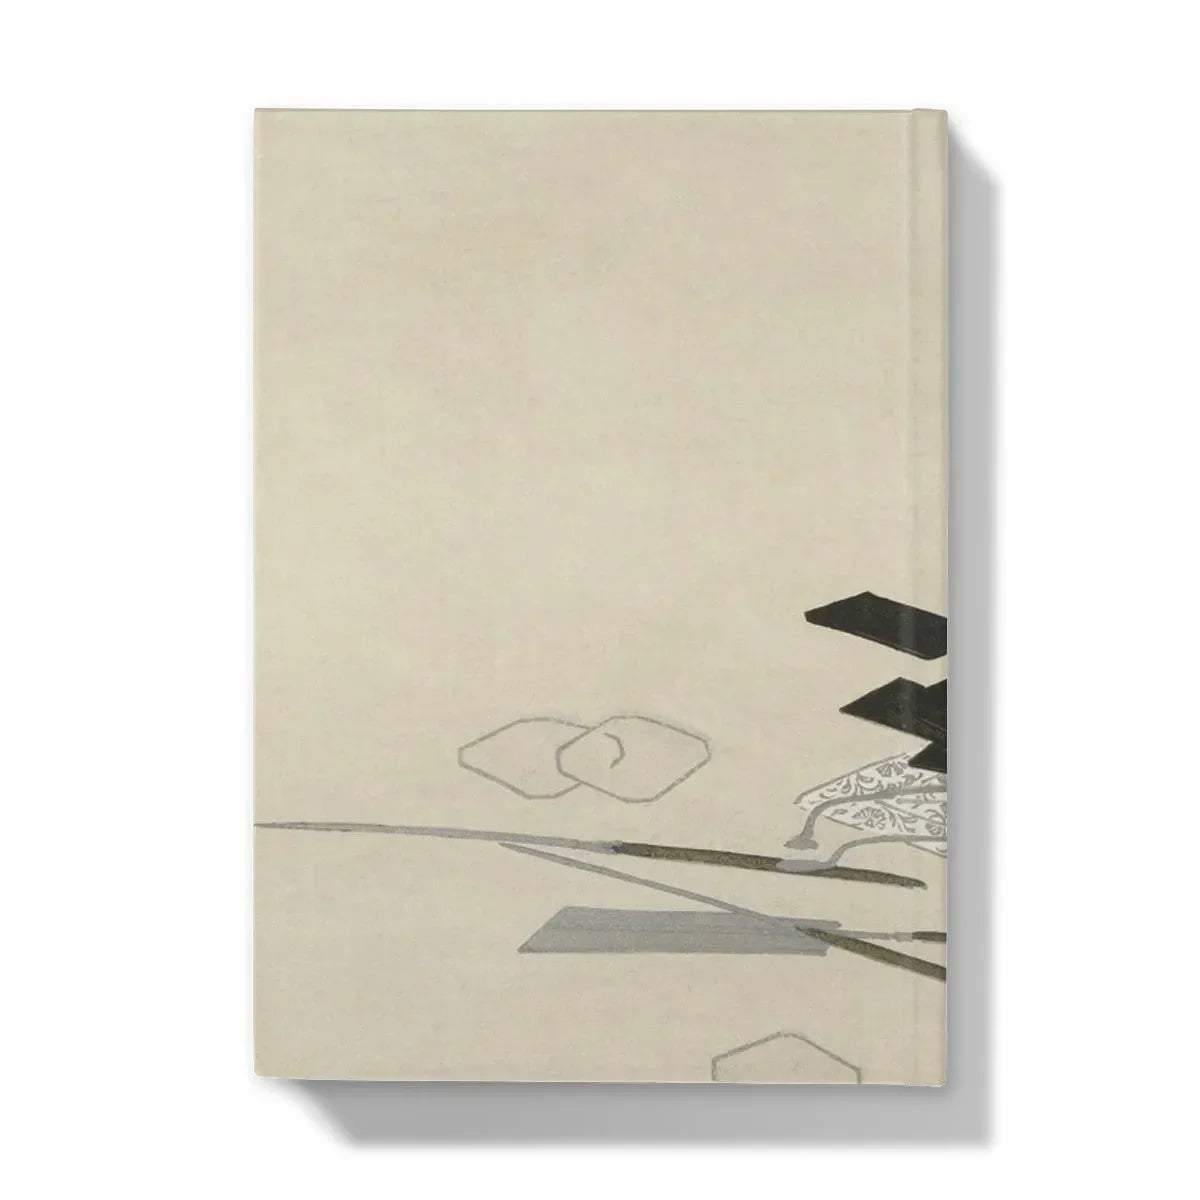 Art Supplies - Kamisaka Sekka Meiji Period Hardback Journal - Notebooks & Notepads - Aesthetic Art